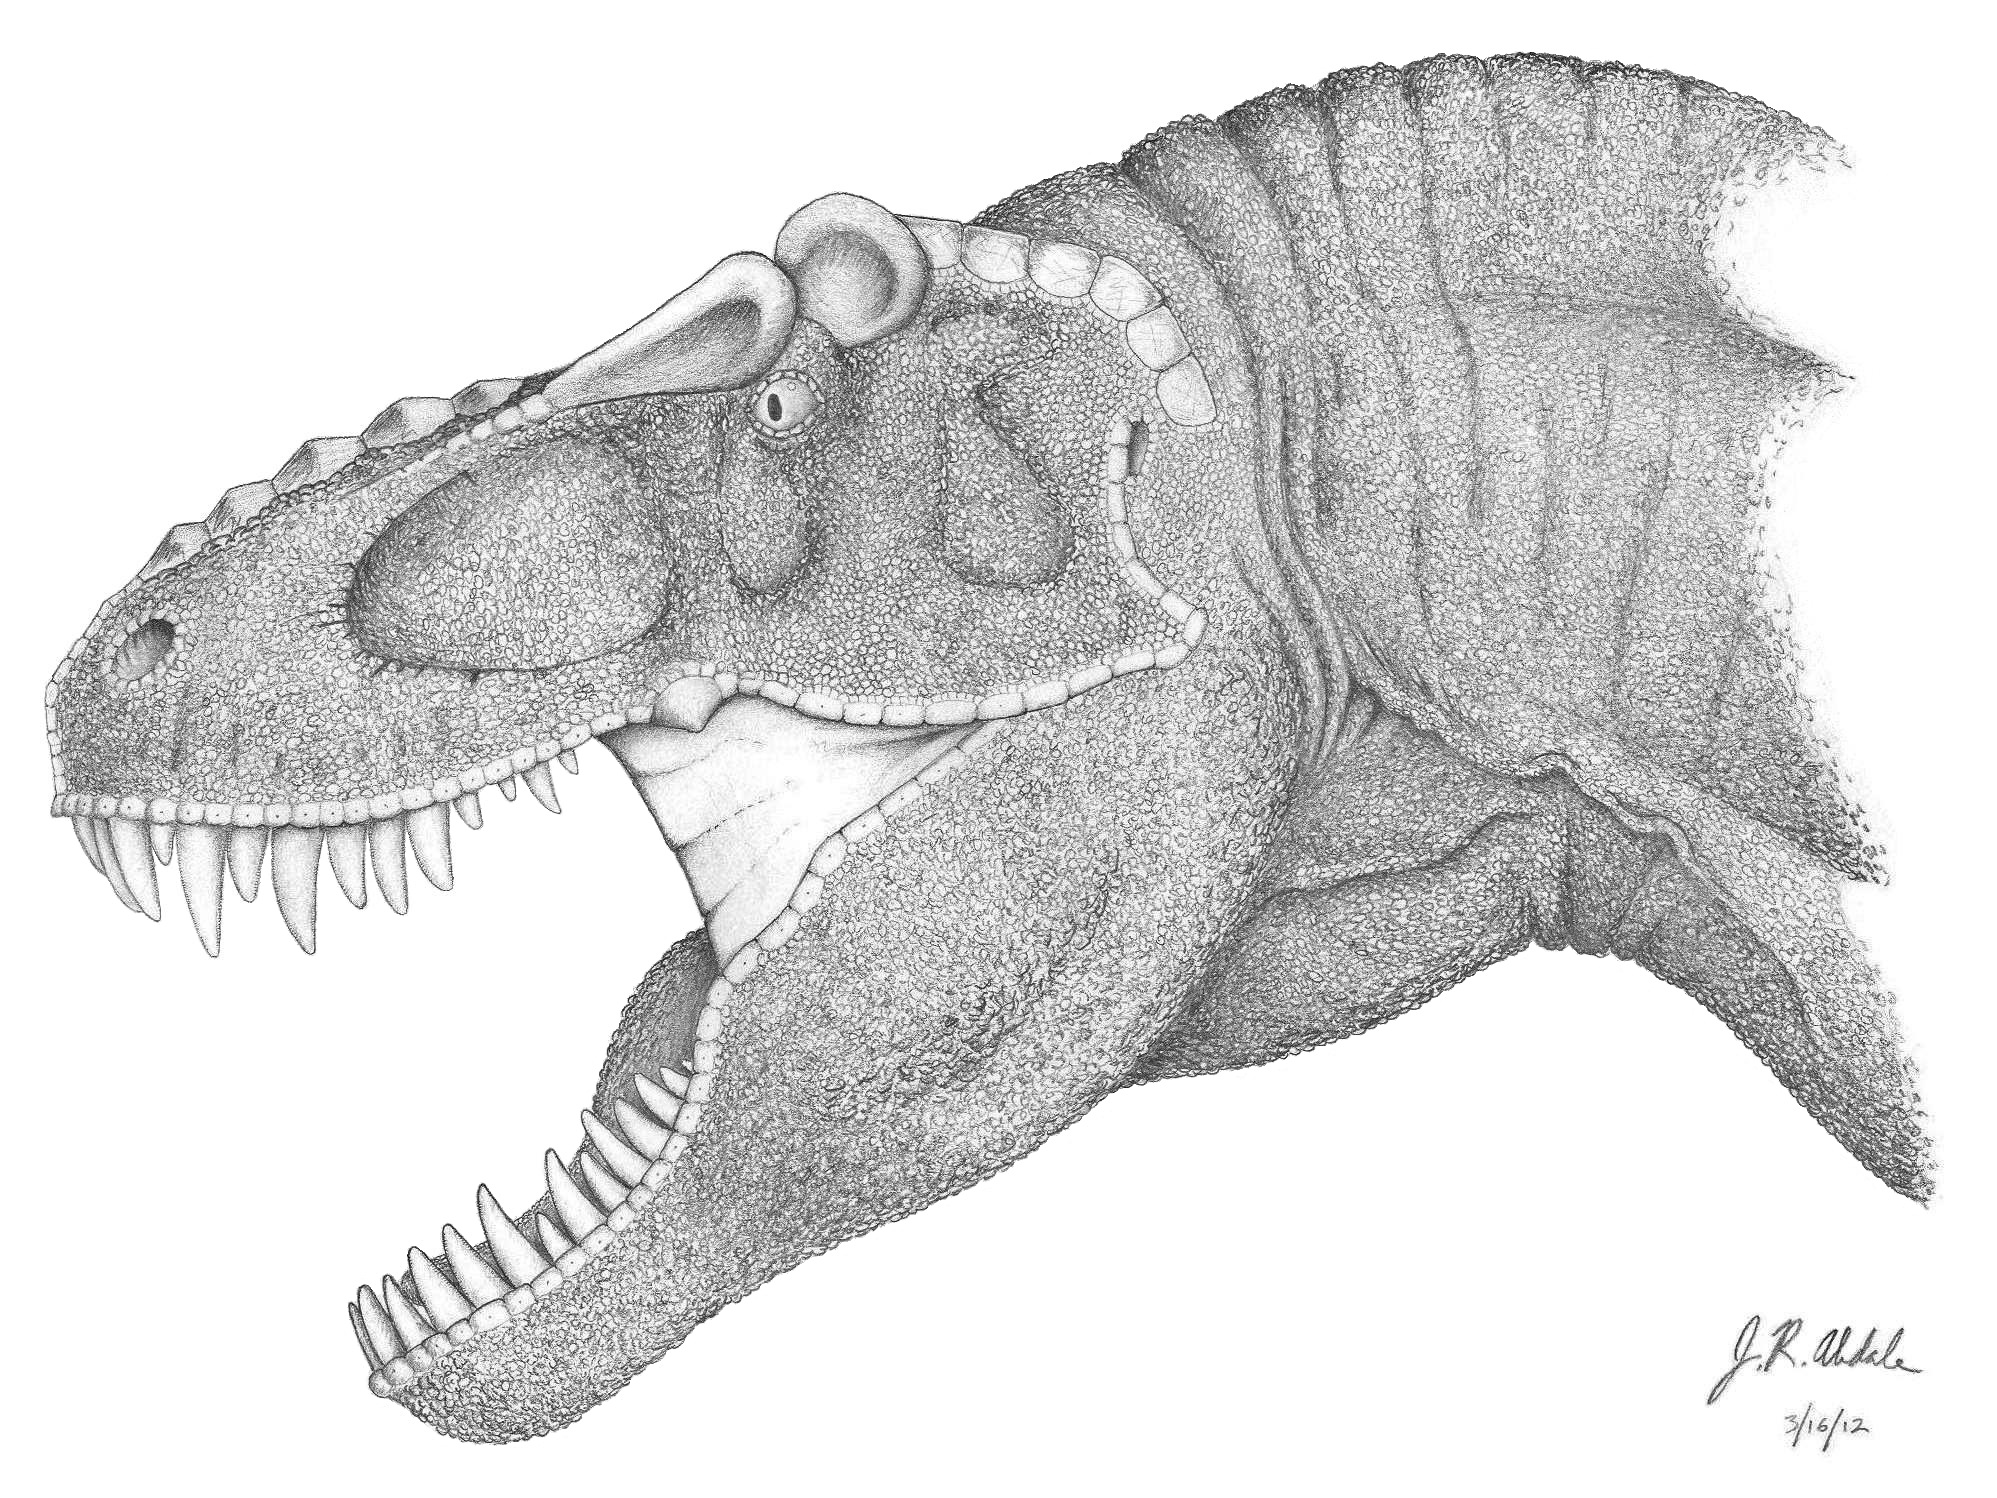 Free Dinosaur Drawing, Download Free Dinosaur Drawing png images, Free